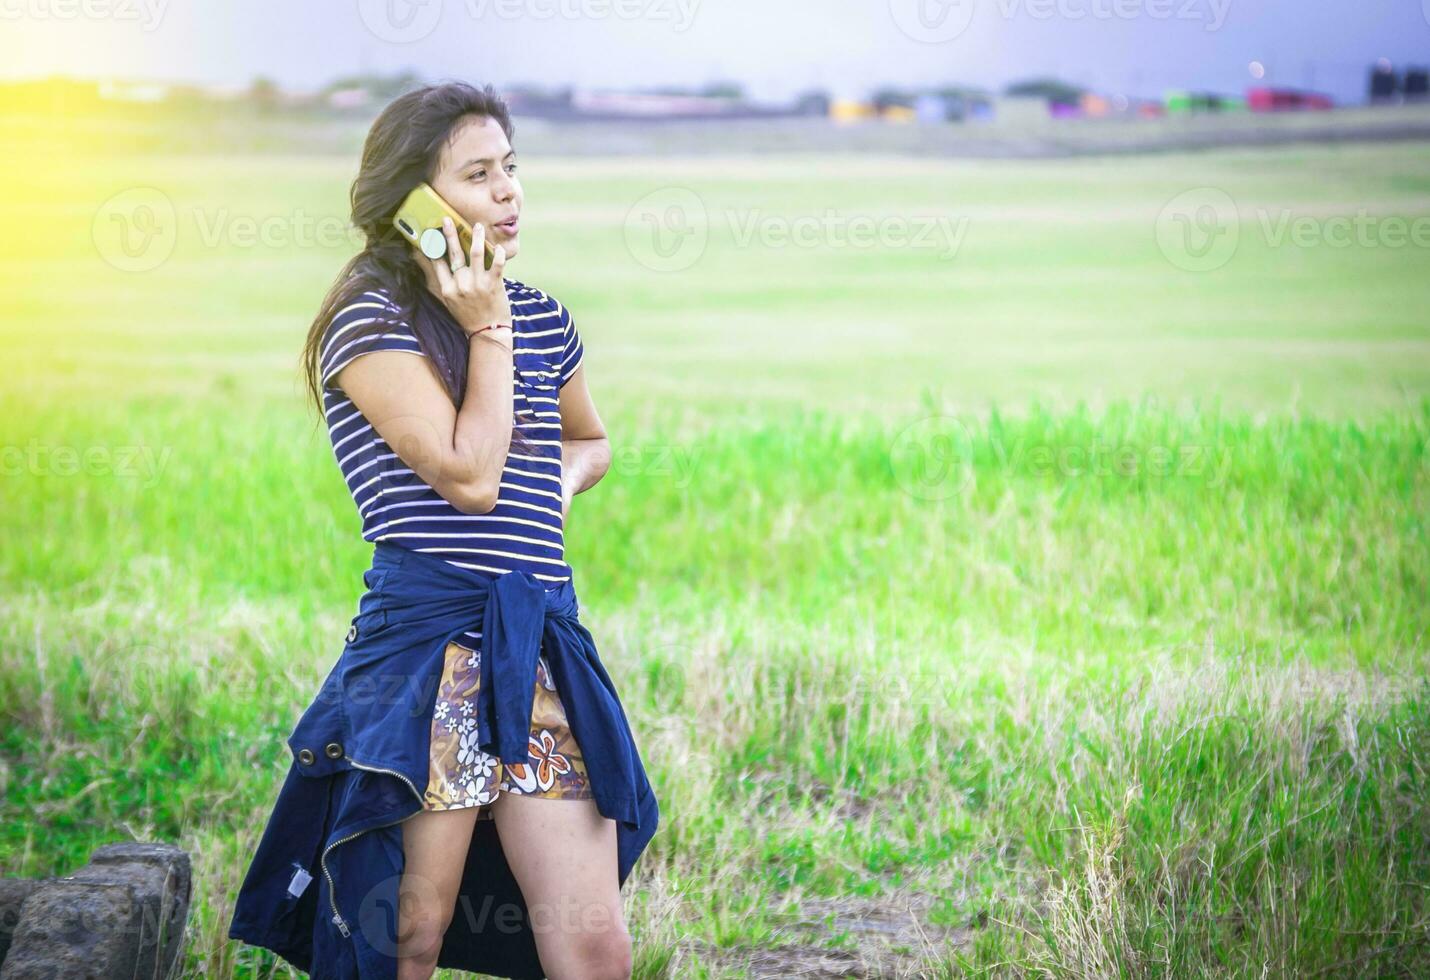 jong meisje roeping telefoon Aan de groen veld, mooi jong vrouw roeping door cel telefoon Aan de gras buitenshuis. foto